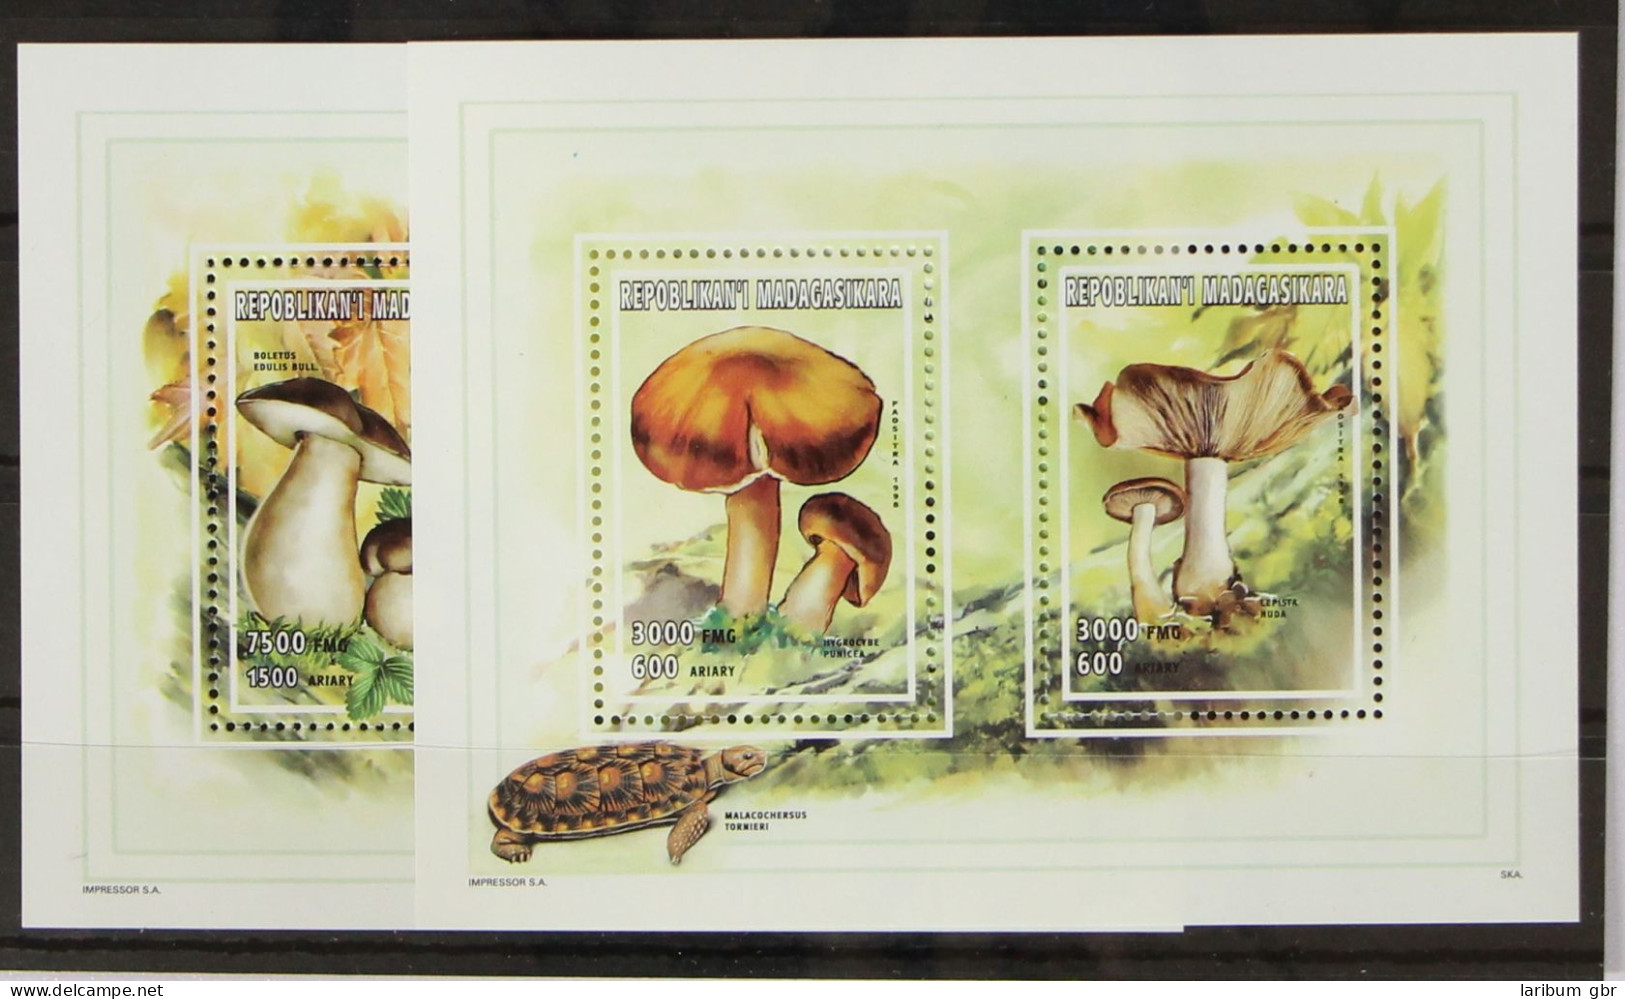 Madagaskar 1991-1992 Und 1997-1998 Postfrisch Kleinbögen / Pilze #GH193 - Madagaskar (1960-...)